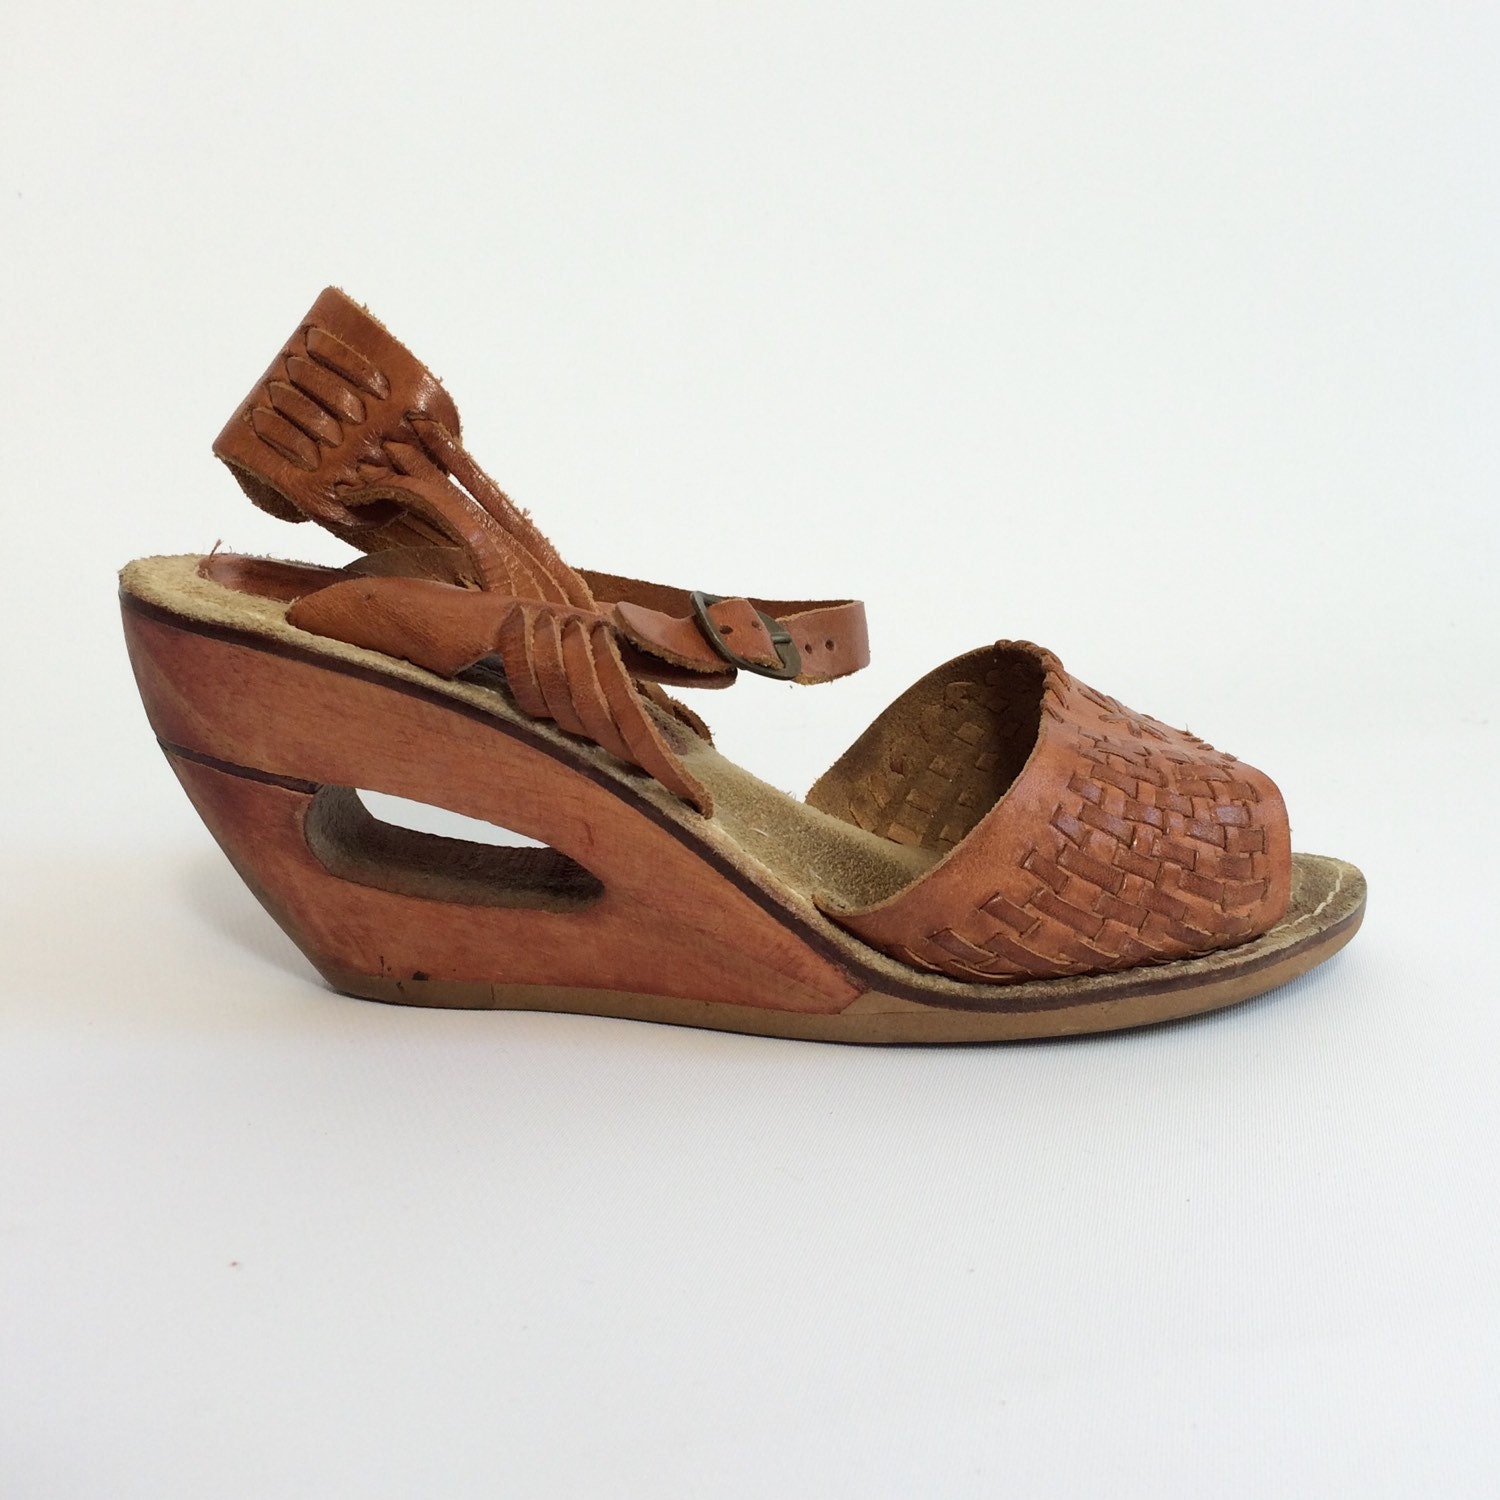 SALE 70s Cutout Wood WEDGE Sandals size 5 Wood Heel Boho